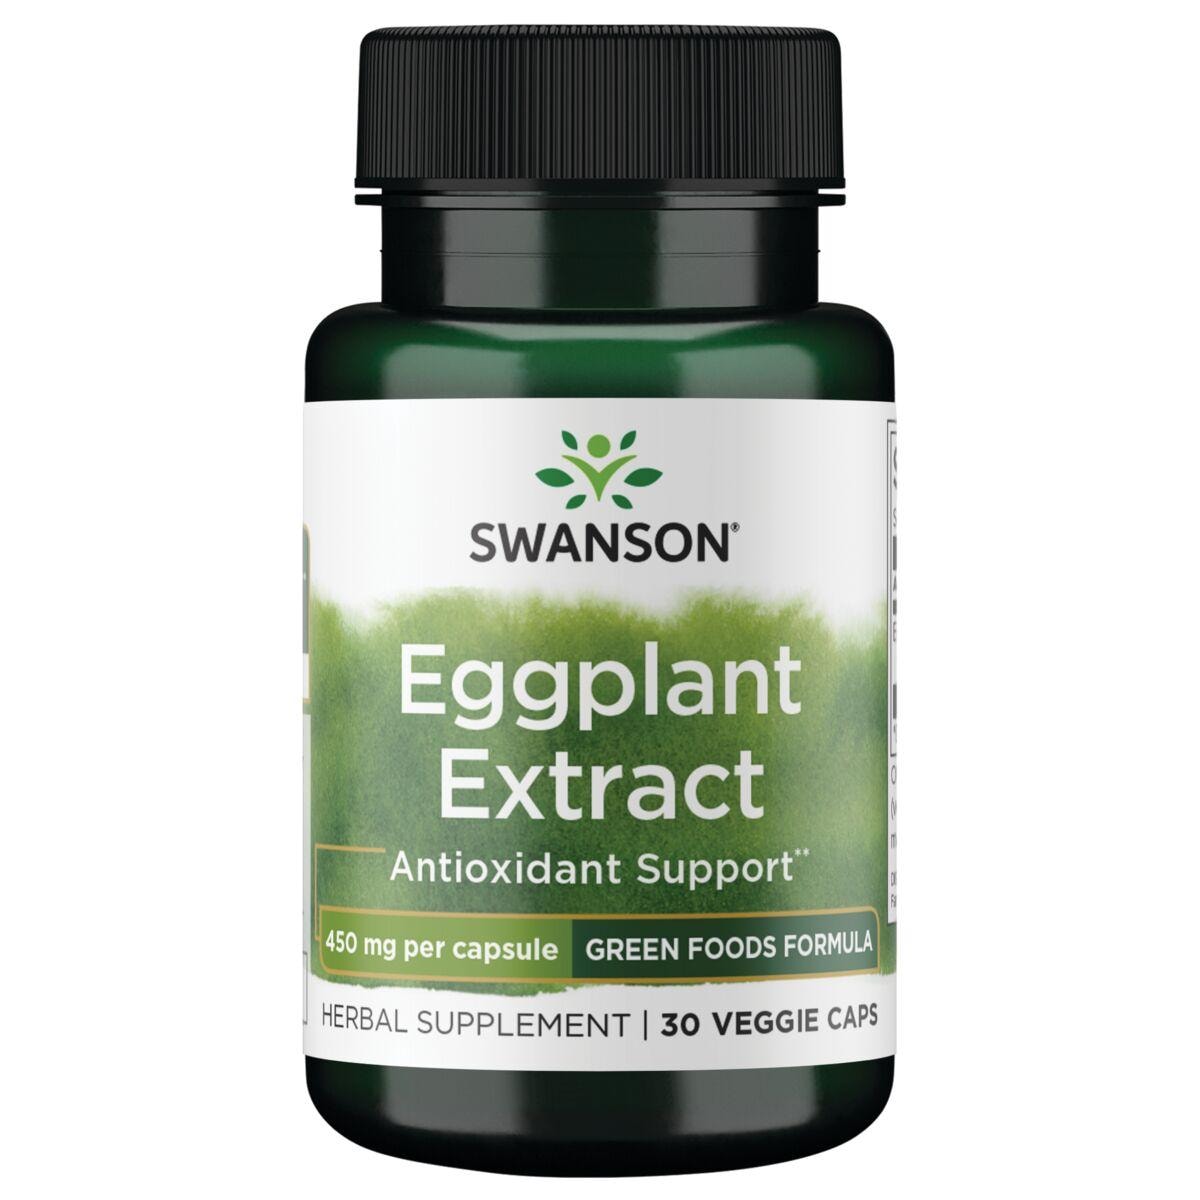 Swanson GreenFoods Formulas Eggplant Extract Supplement Vitamin | 450 mg | 30 Veg Caps